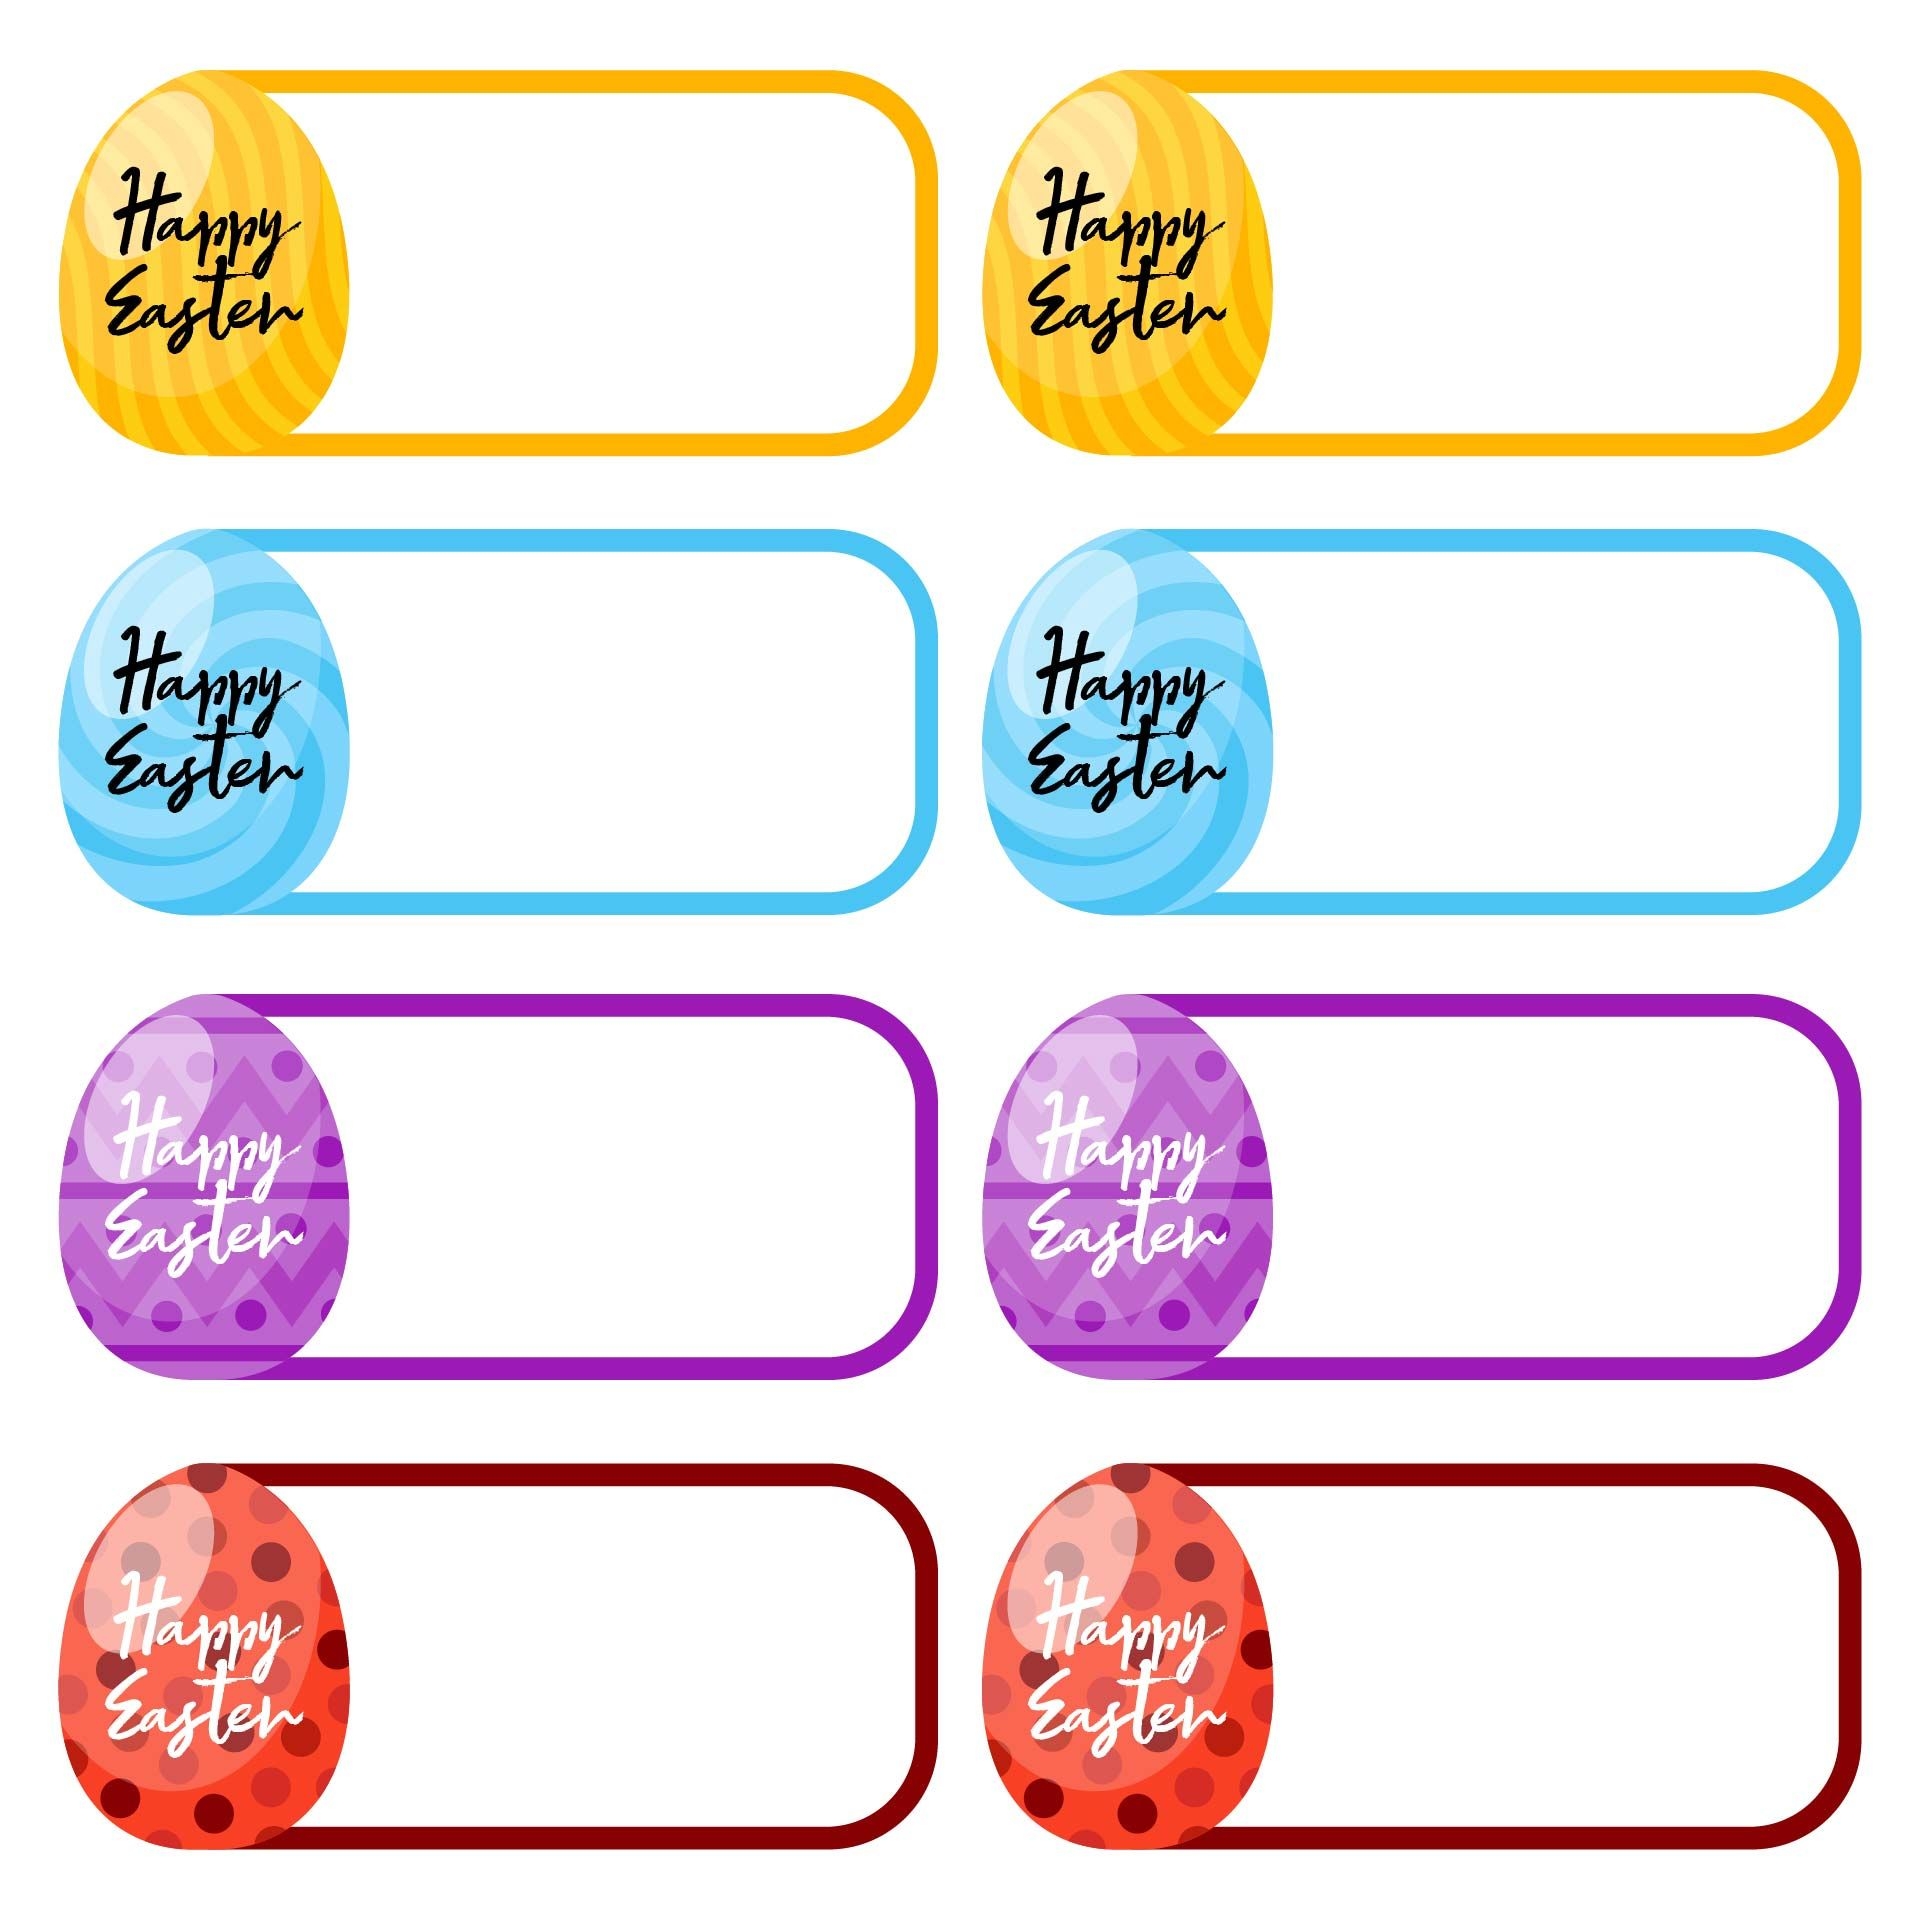 10 Best Free Printable Easter Name Tag Labels PDF For Free At Printablee Free Printable Gift Tags Gift Tag Template Printable Easter Printables Free